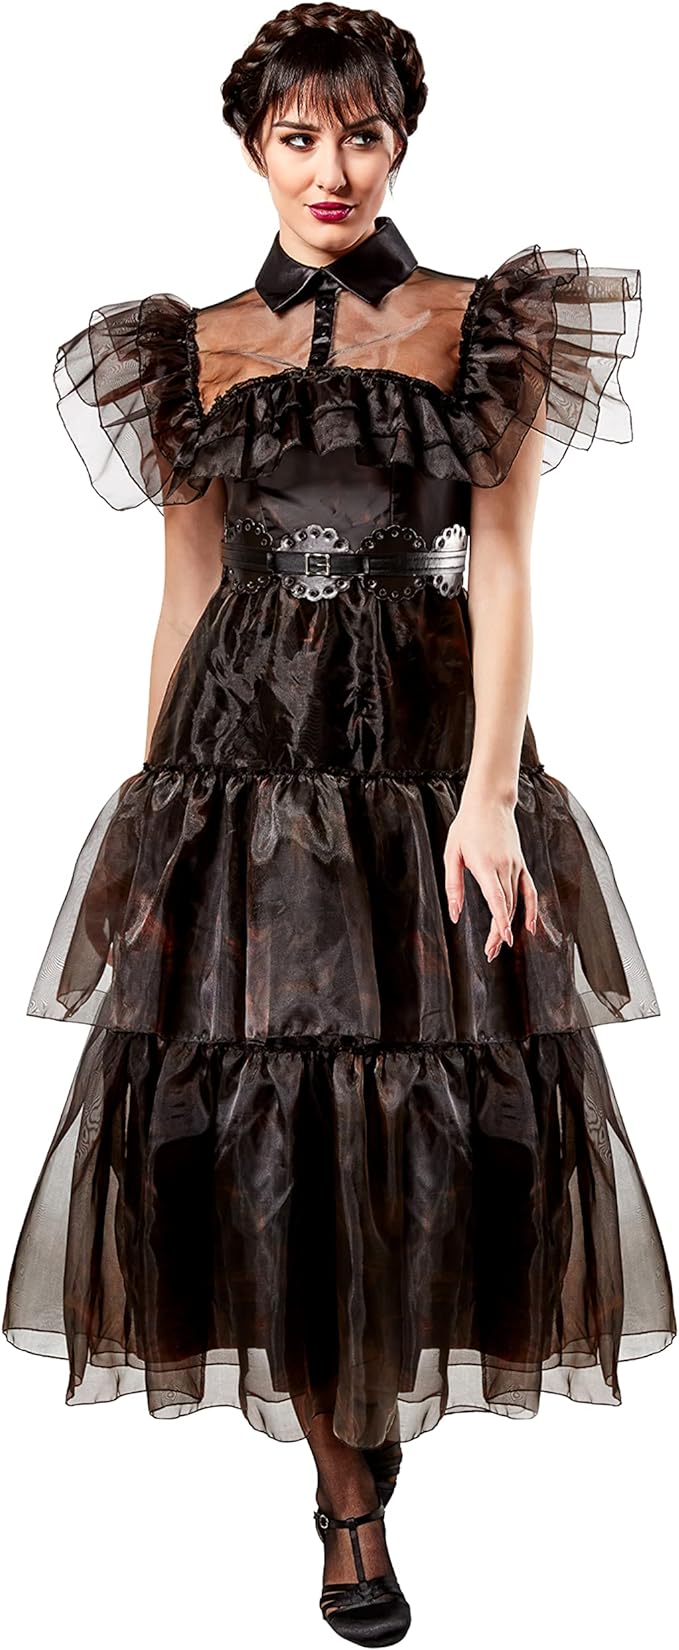 Wednesday Addams - Dance Dress - Adult Costume